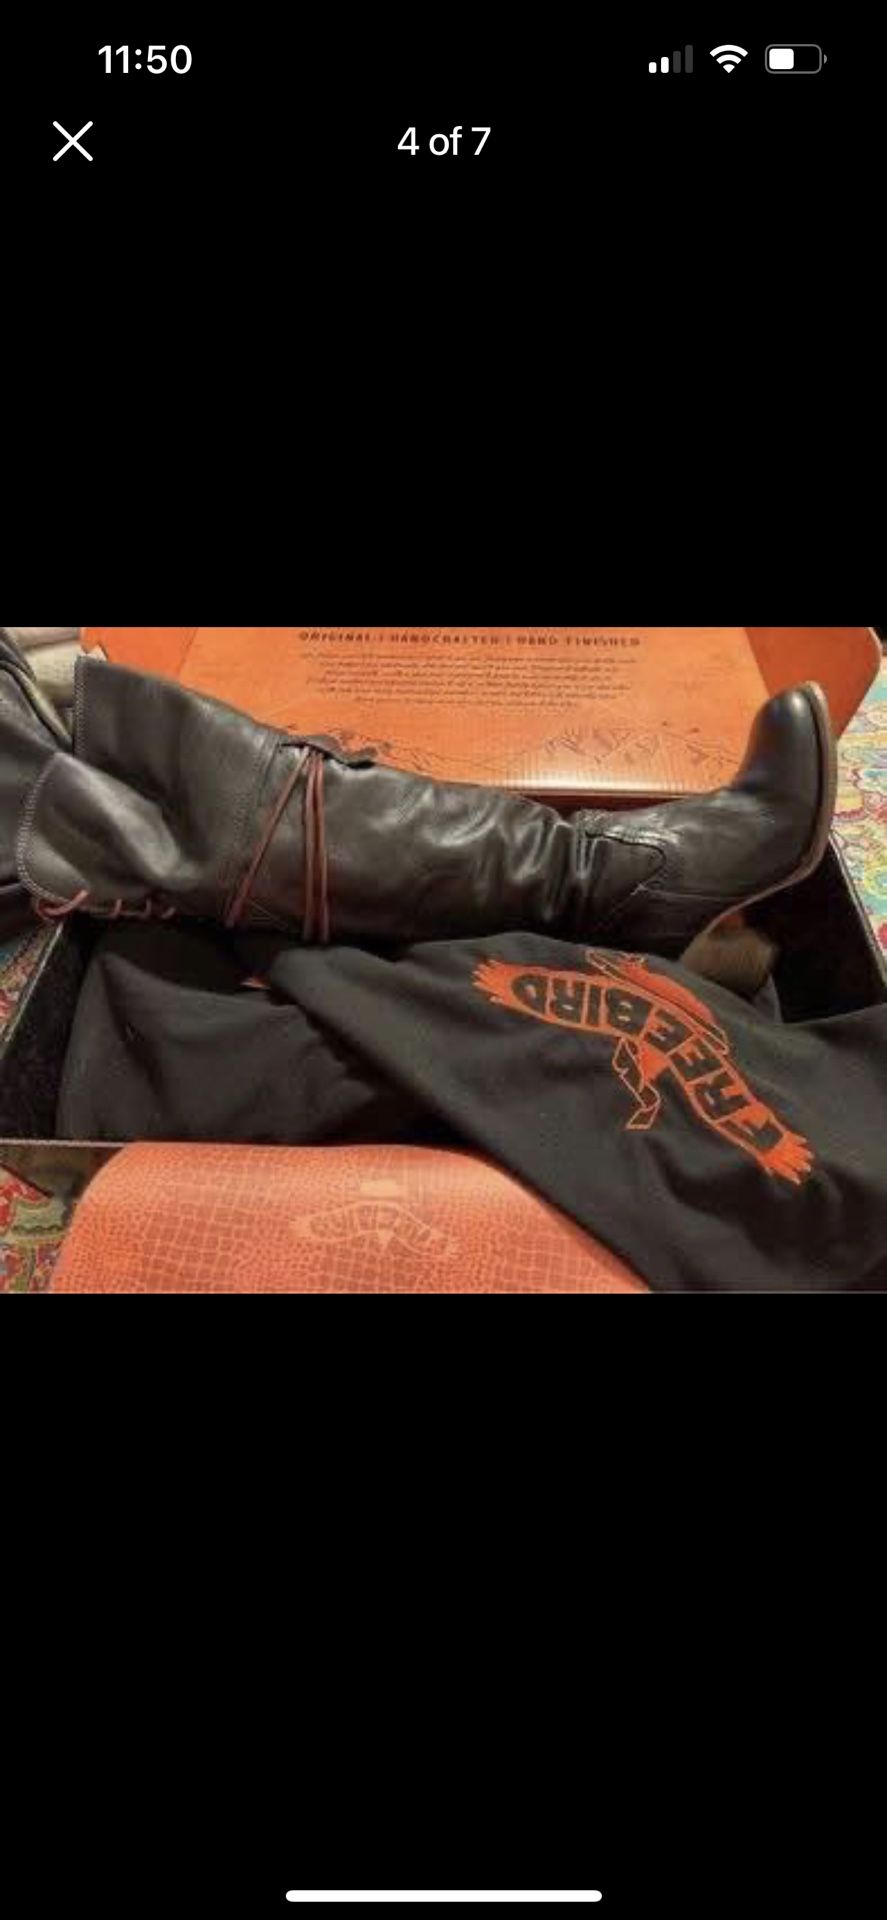 Women’s Freebird Knee High Boots / Genuine Black Leather